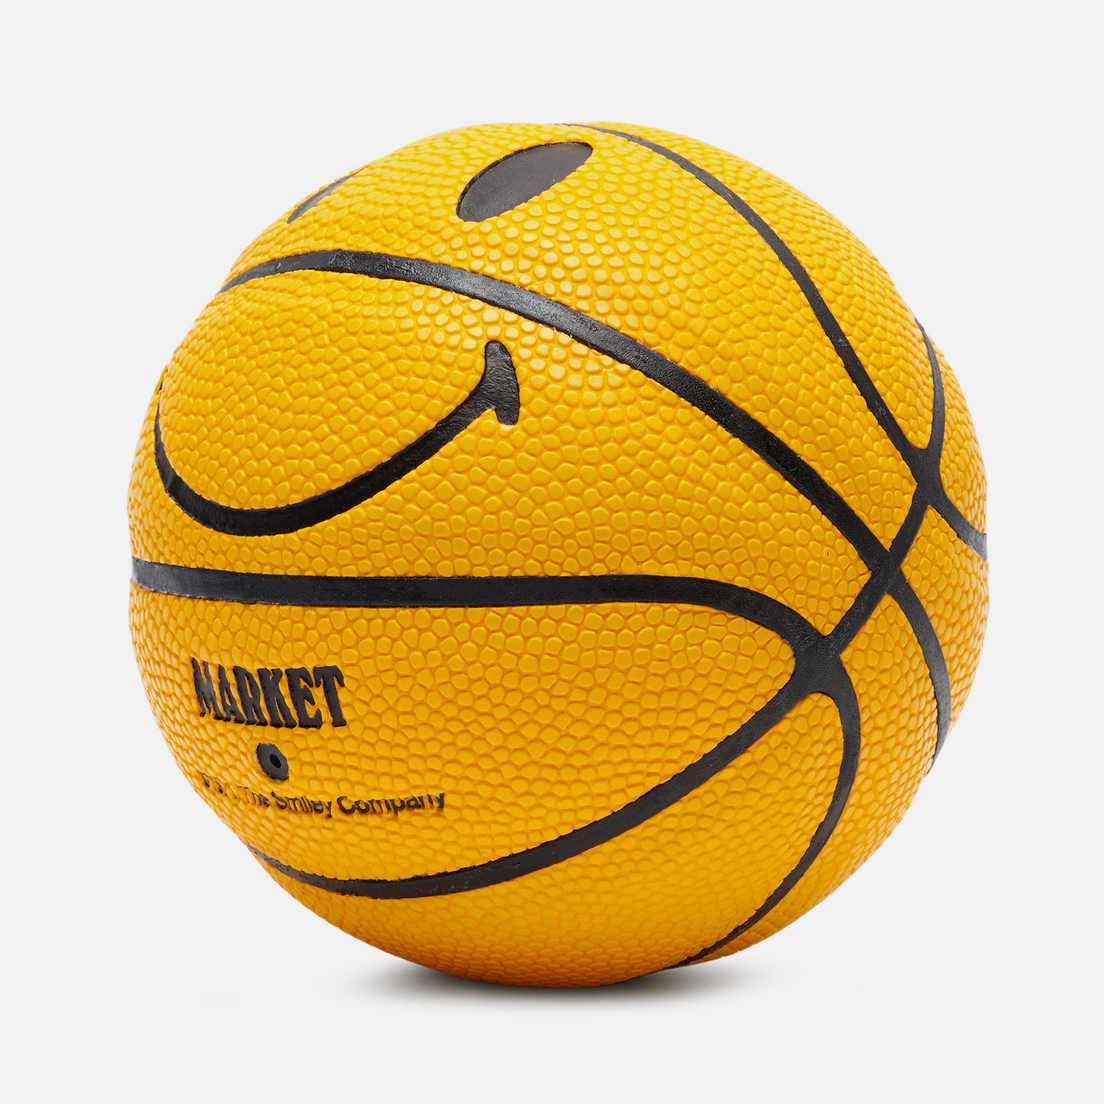 MARKET Баскетбольный мяч Smiley Mini